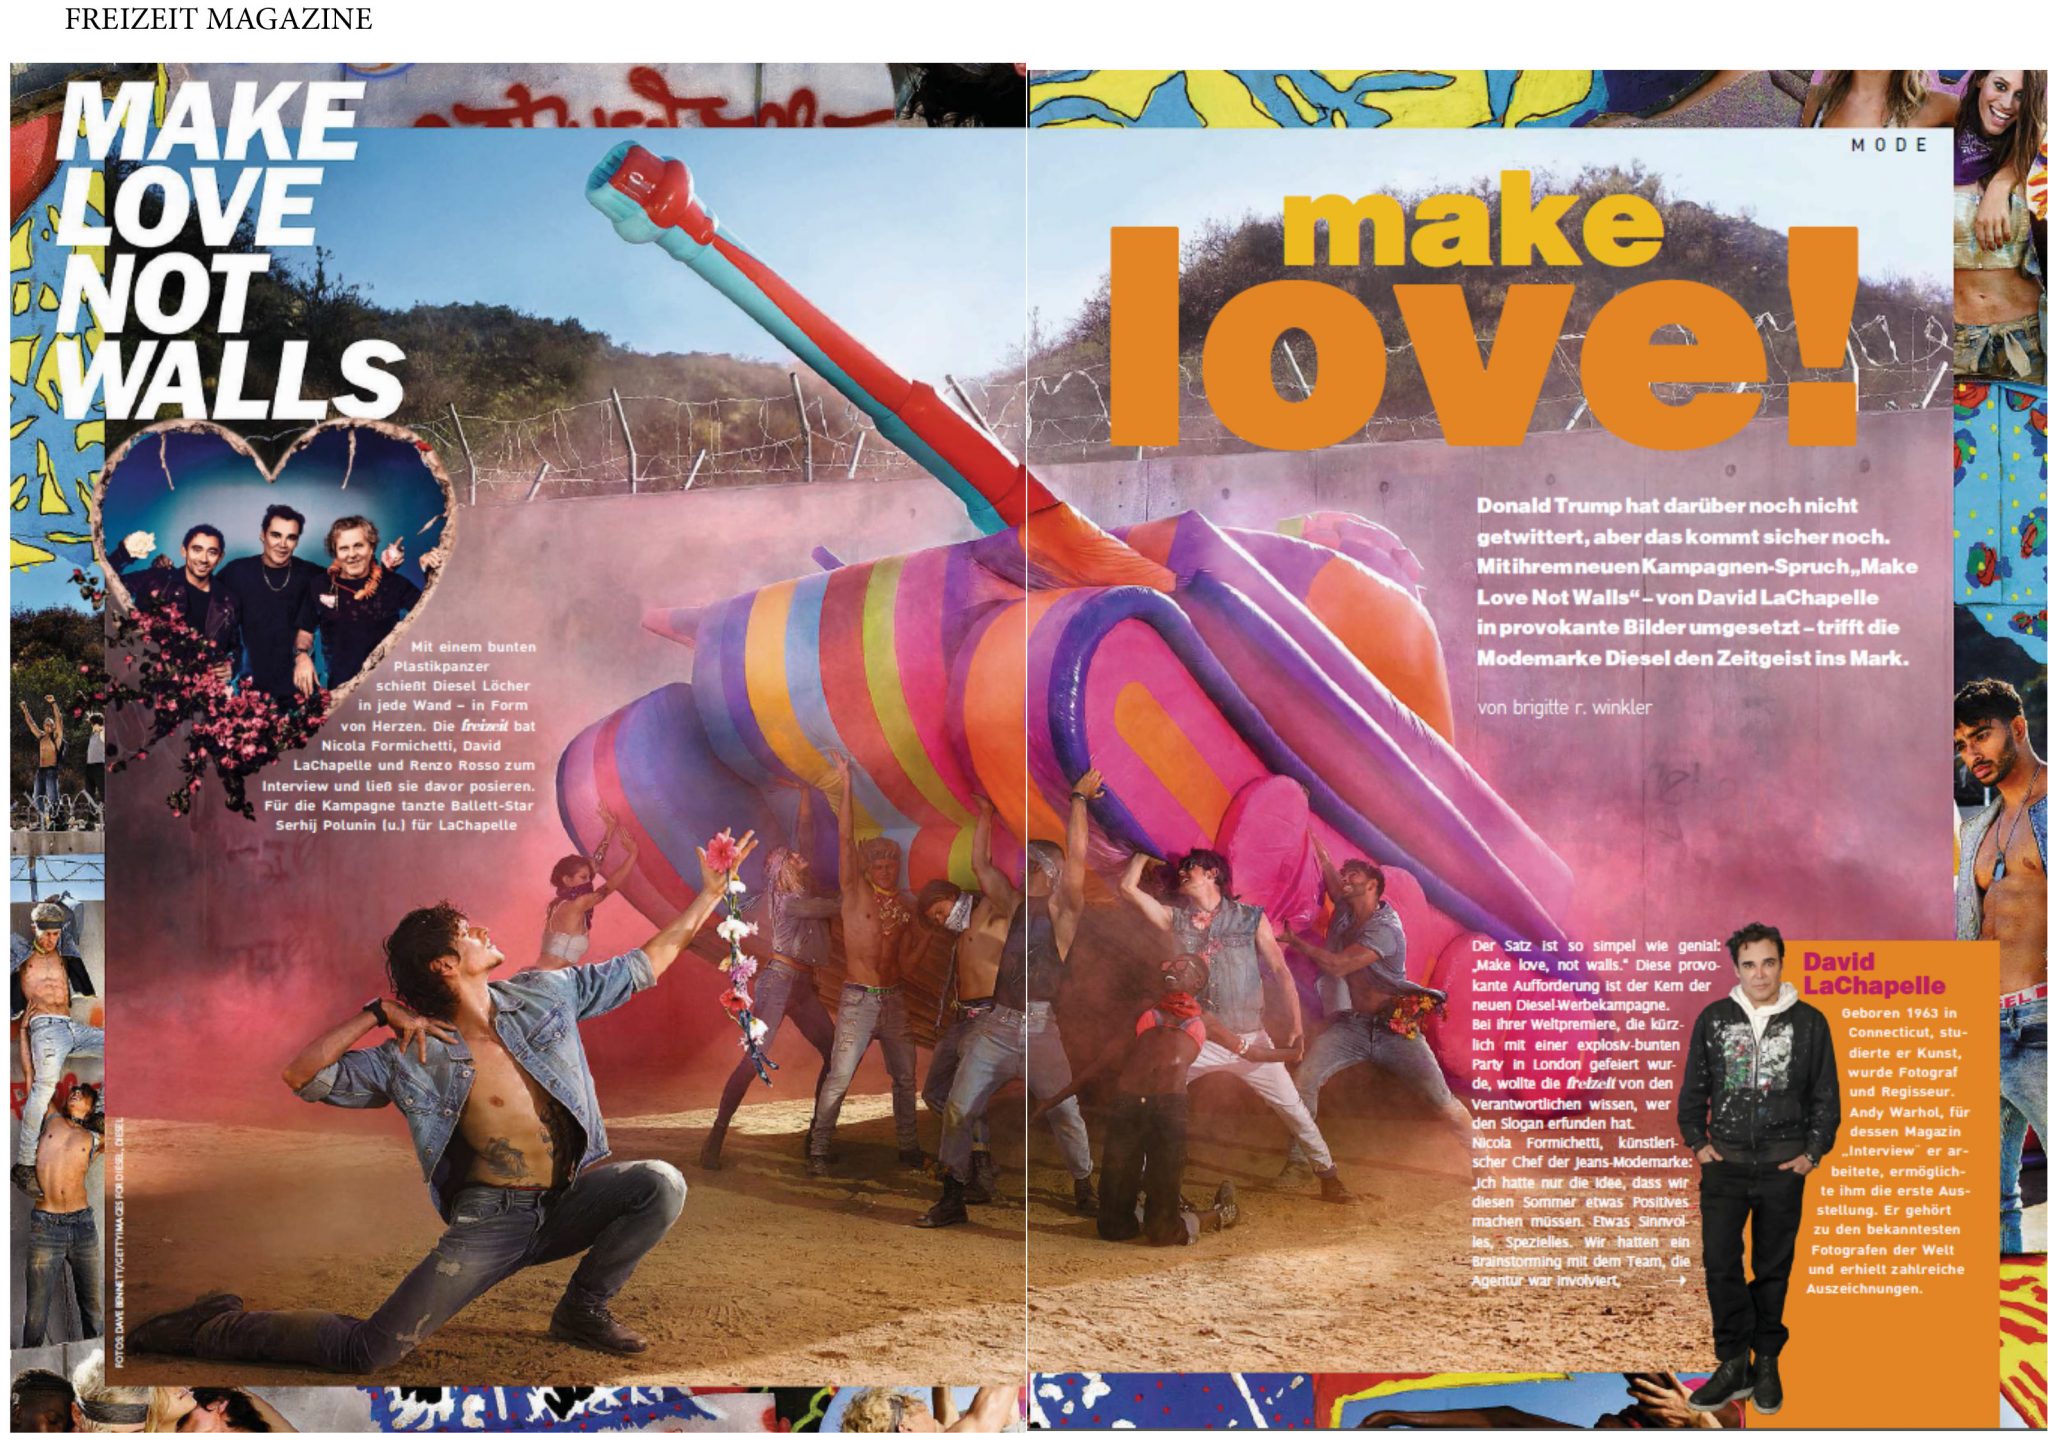 David LaChapelle | Diesel - Make love not walls | Selected Press: Freizeit Magazine Austria | 21